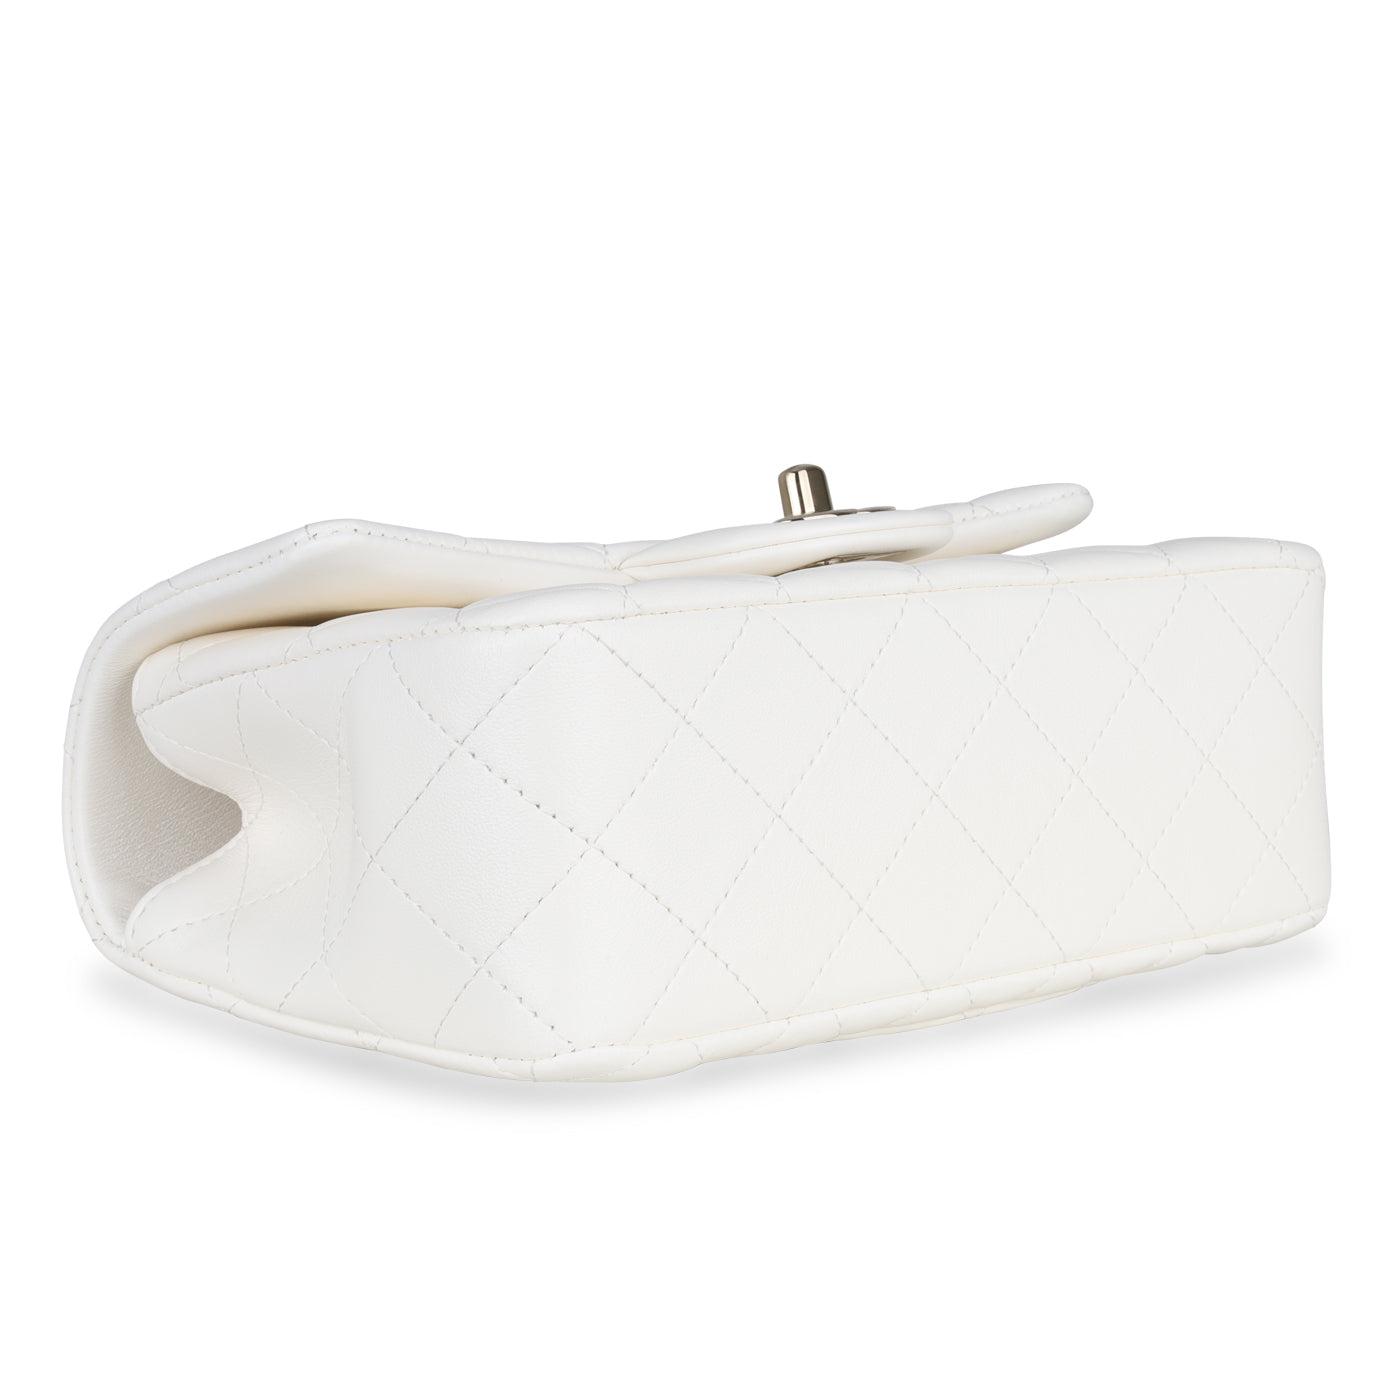 small white chanel handbag